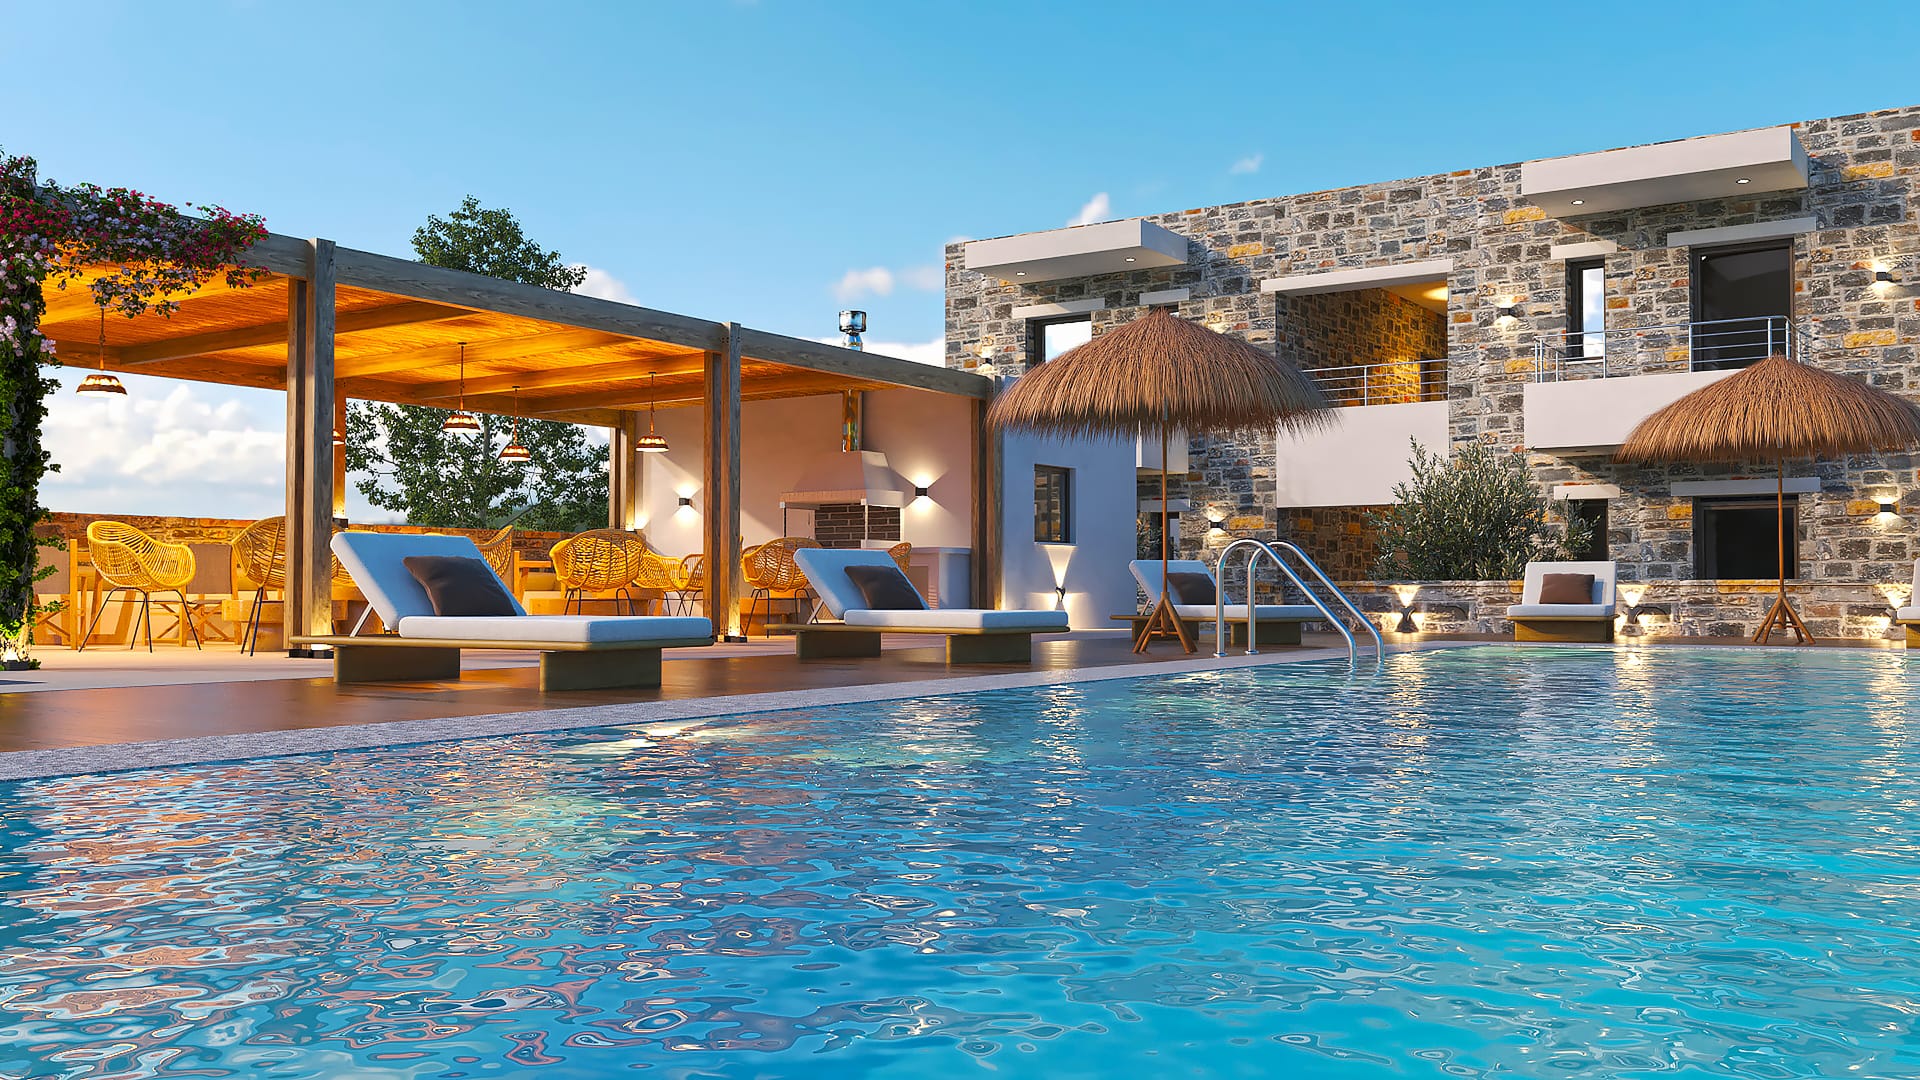 Volta Suites and Villas - Κάτω Γούβες, Κρήτη ✦ 4 Ημέρες (3 Διανυκτερεύσεις) ✦ 2 άτομα ✦ 1 ✦ 14/05/2022 έως 30/09/2022 ✦ Κοντά σε παραλία!